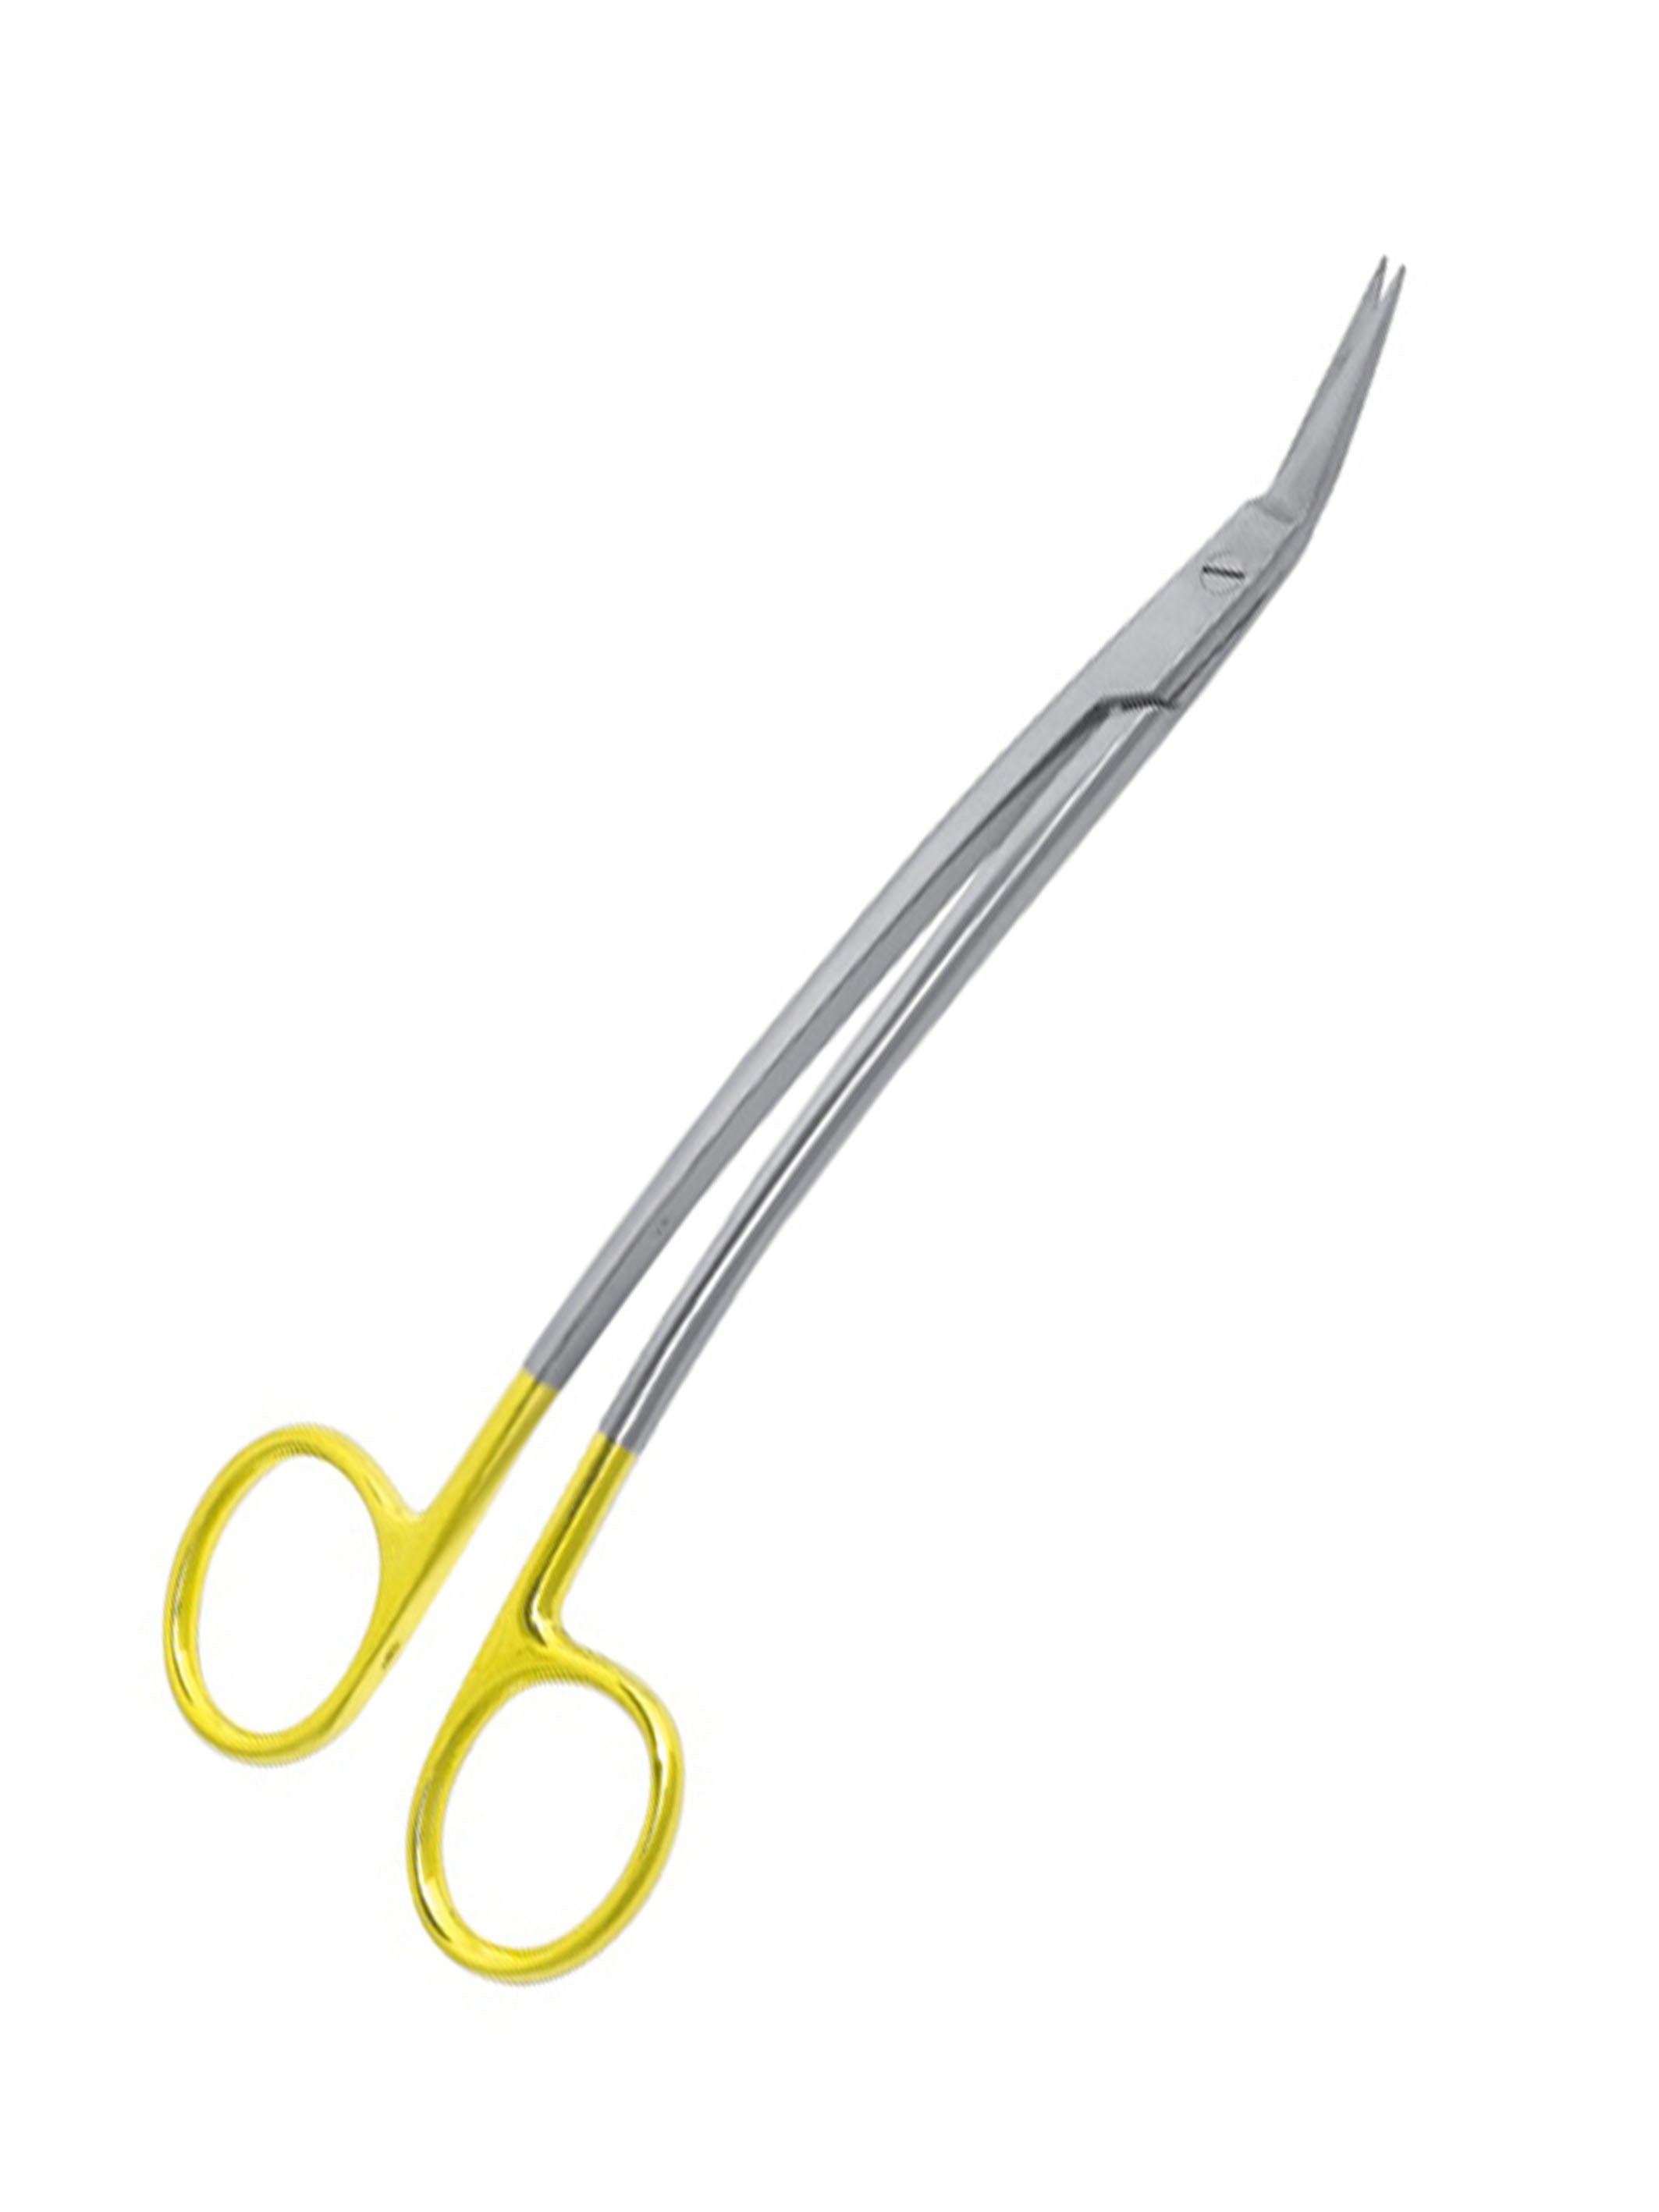 Gator-Edge Scissors with Carbide Inserted Blades